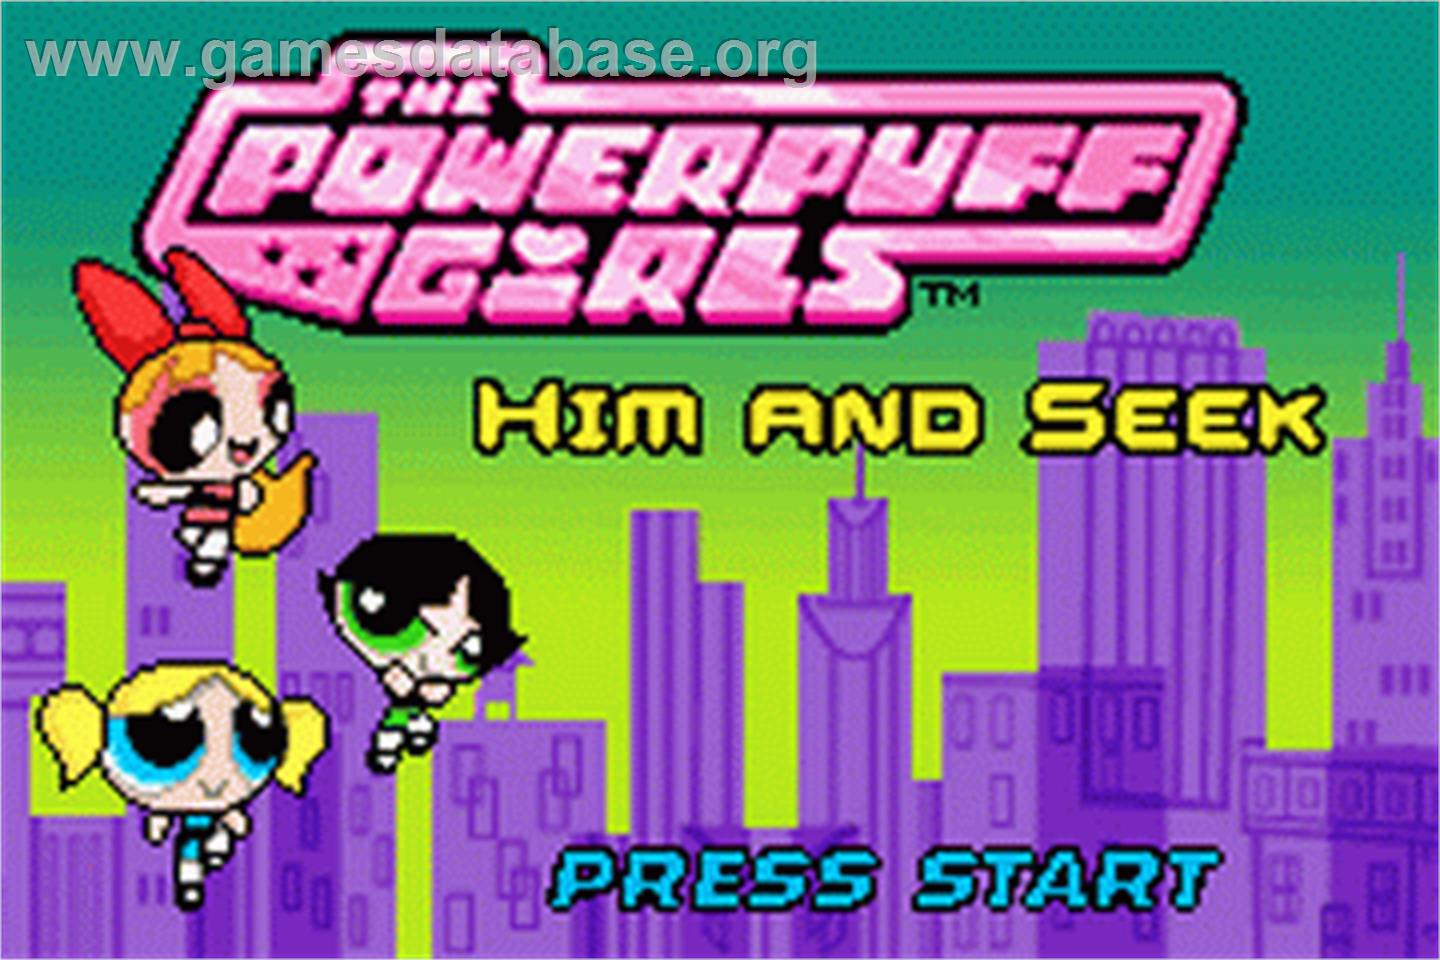 Powerpuff Girls: Him and Seek - Nintendo Game Boy Advance - Artwork - Title Screen